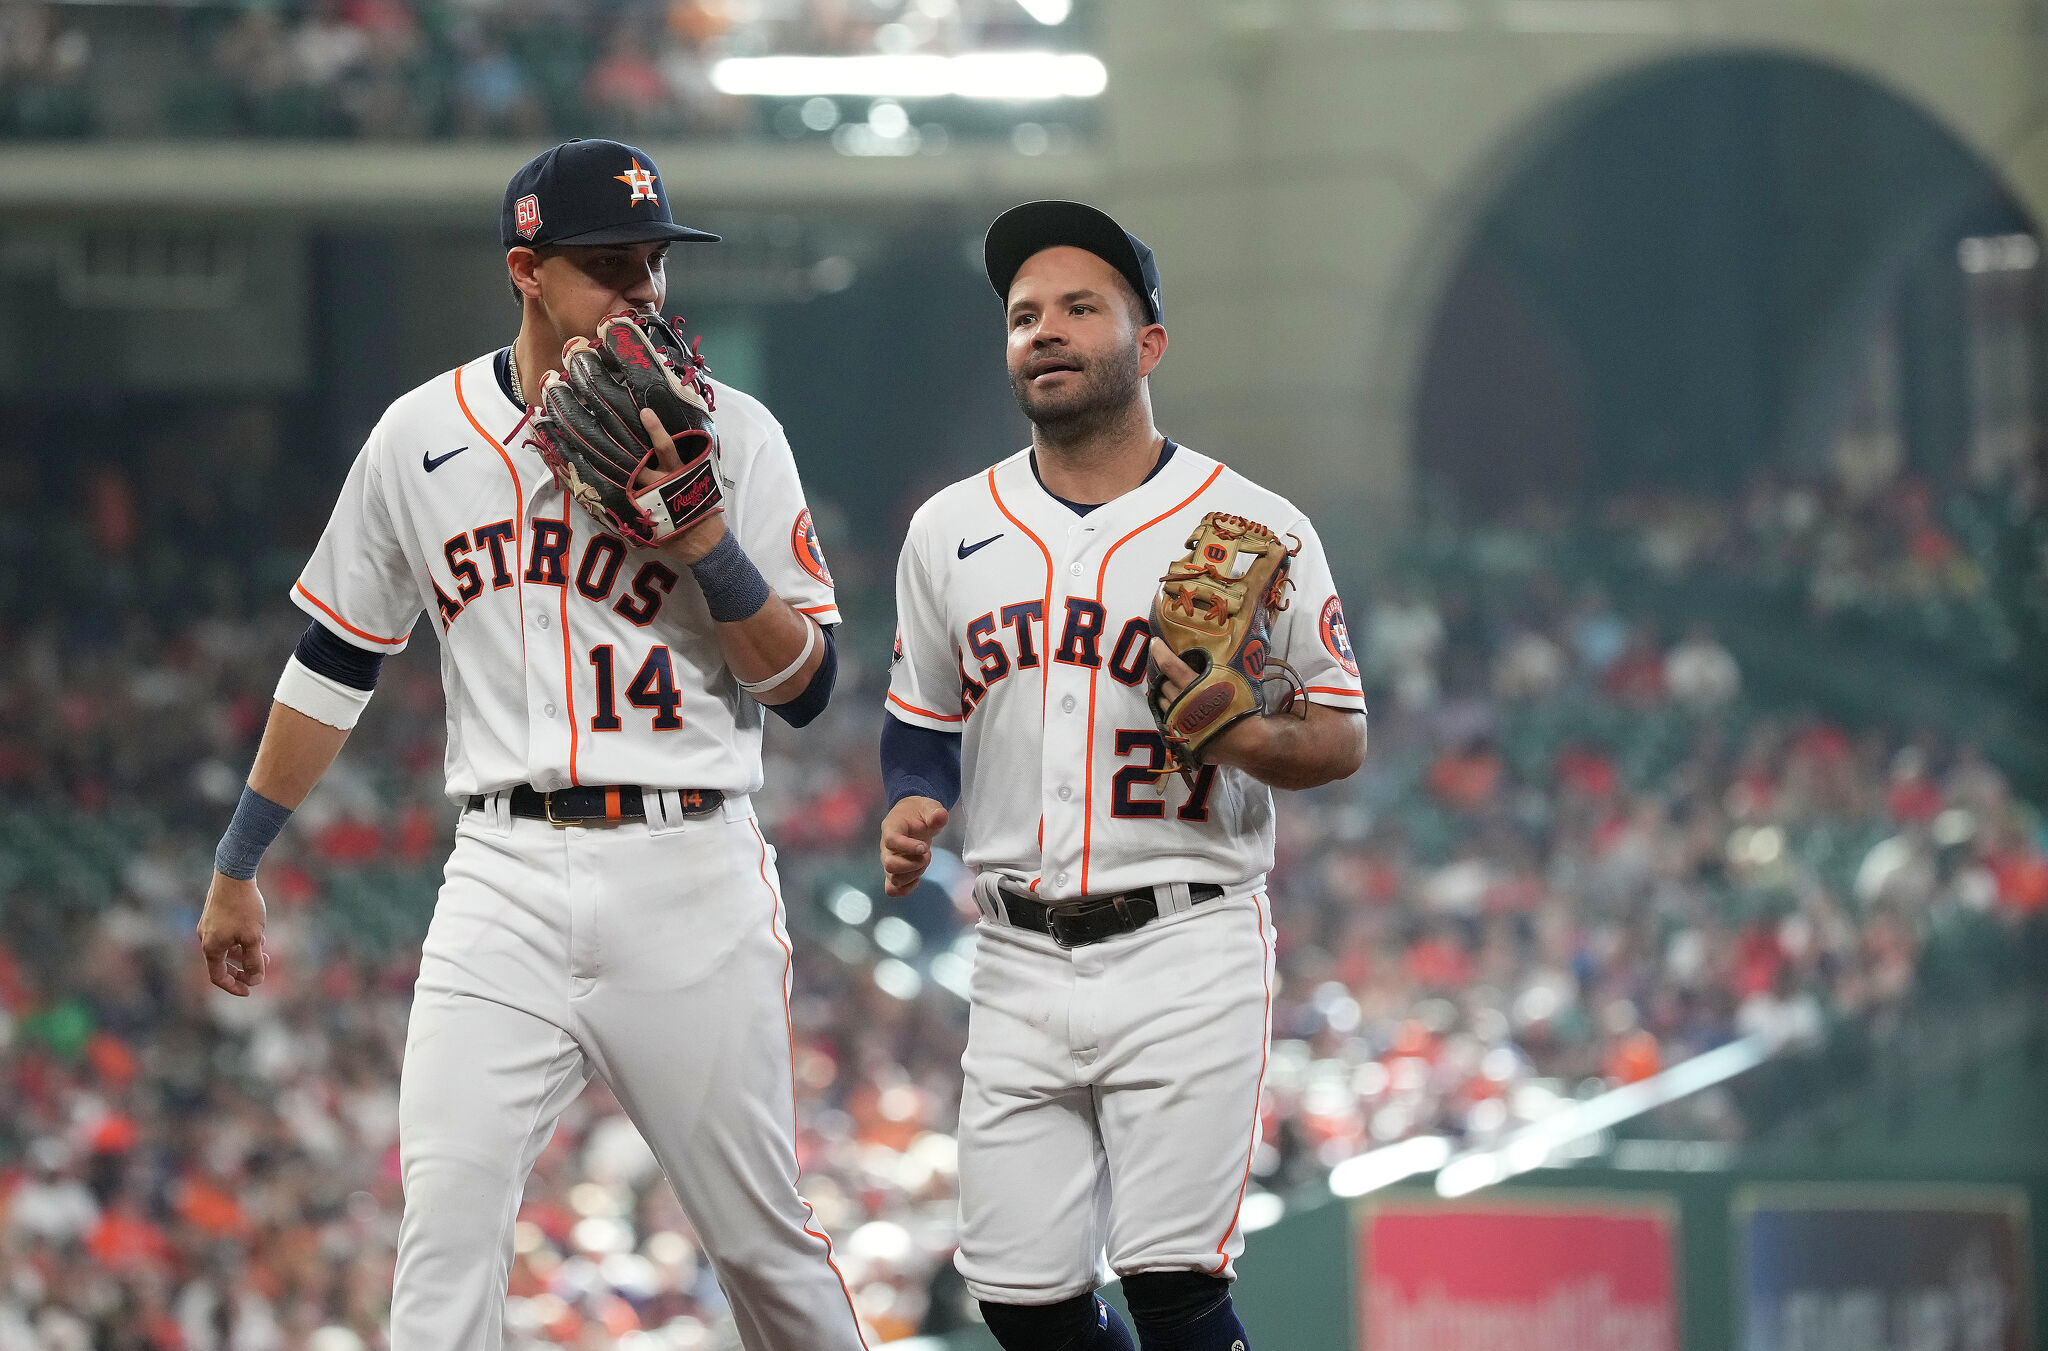 Why Mauricio Dubón isn't sweating Houston Astros' slump